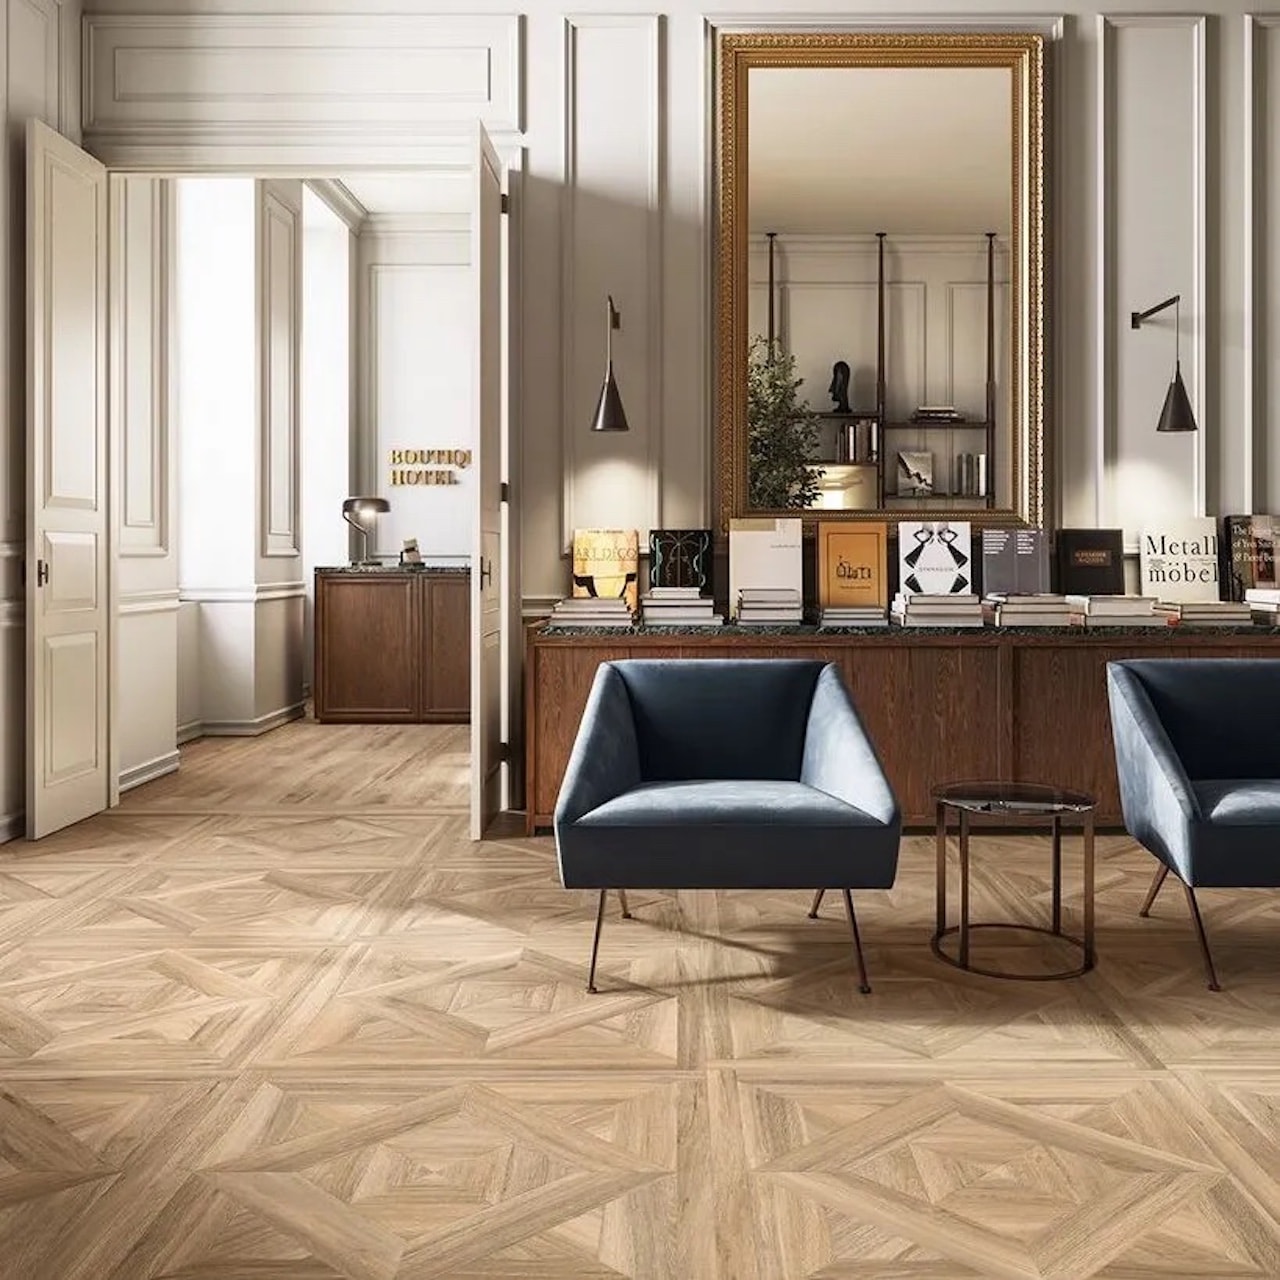 updated hotel decor wood like tile flooring hotel lobby